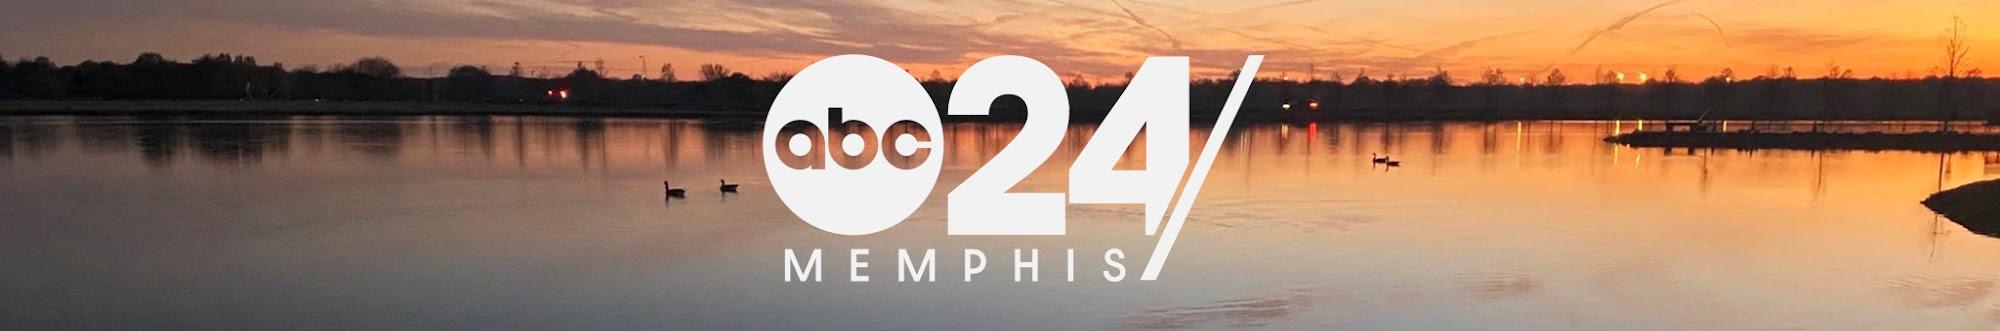 ABC24 Memphis